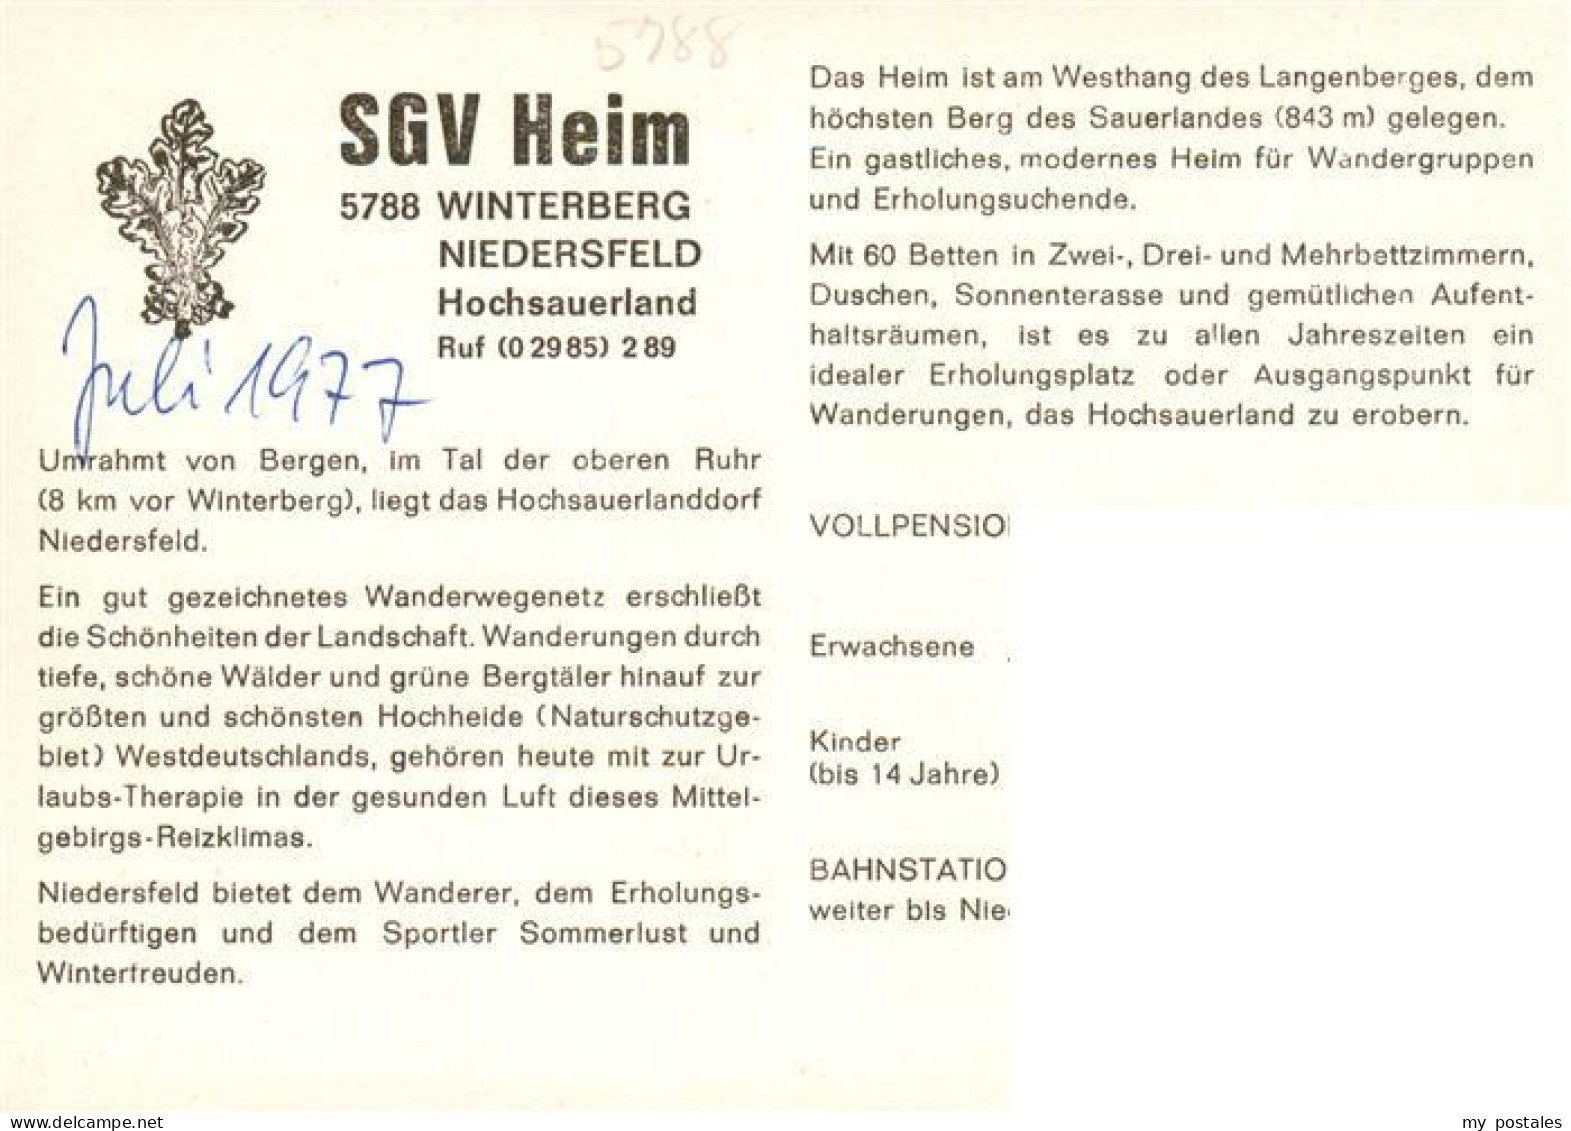 73942478 Niedersfeld_Winterberg SGV Heim Gastraeume - Winterberg